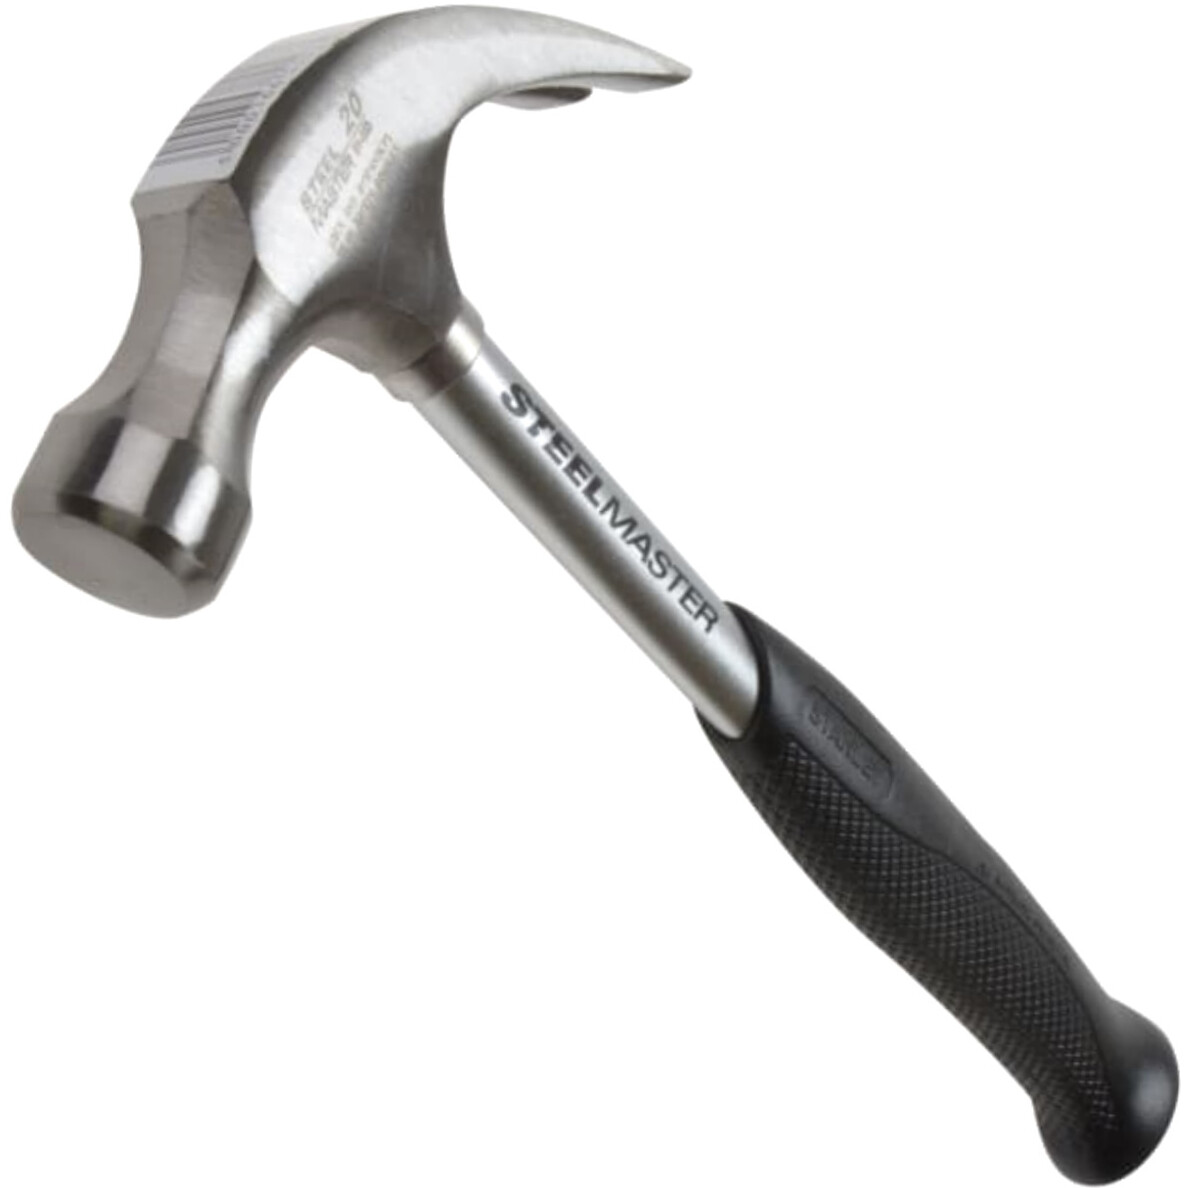 Stanley Tools 151033 ST1 Steelmaster Claw Hammer 567g 20oz 